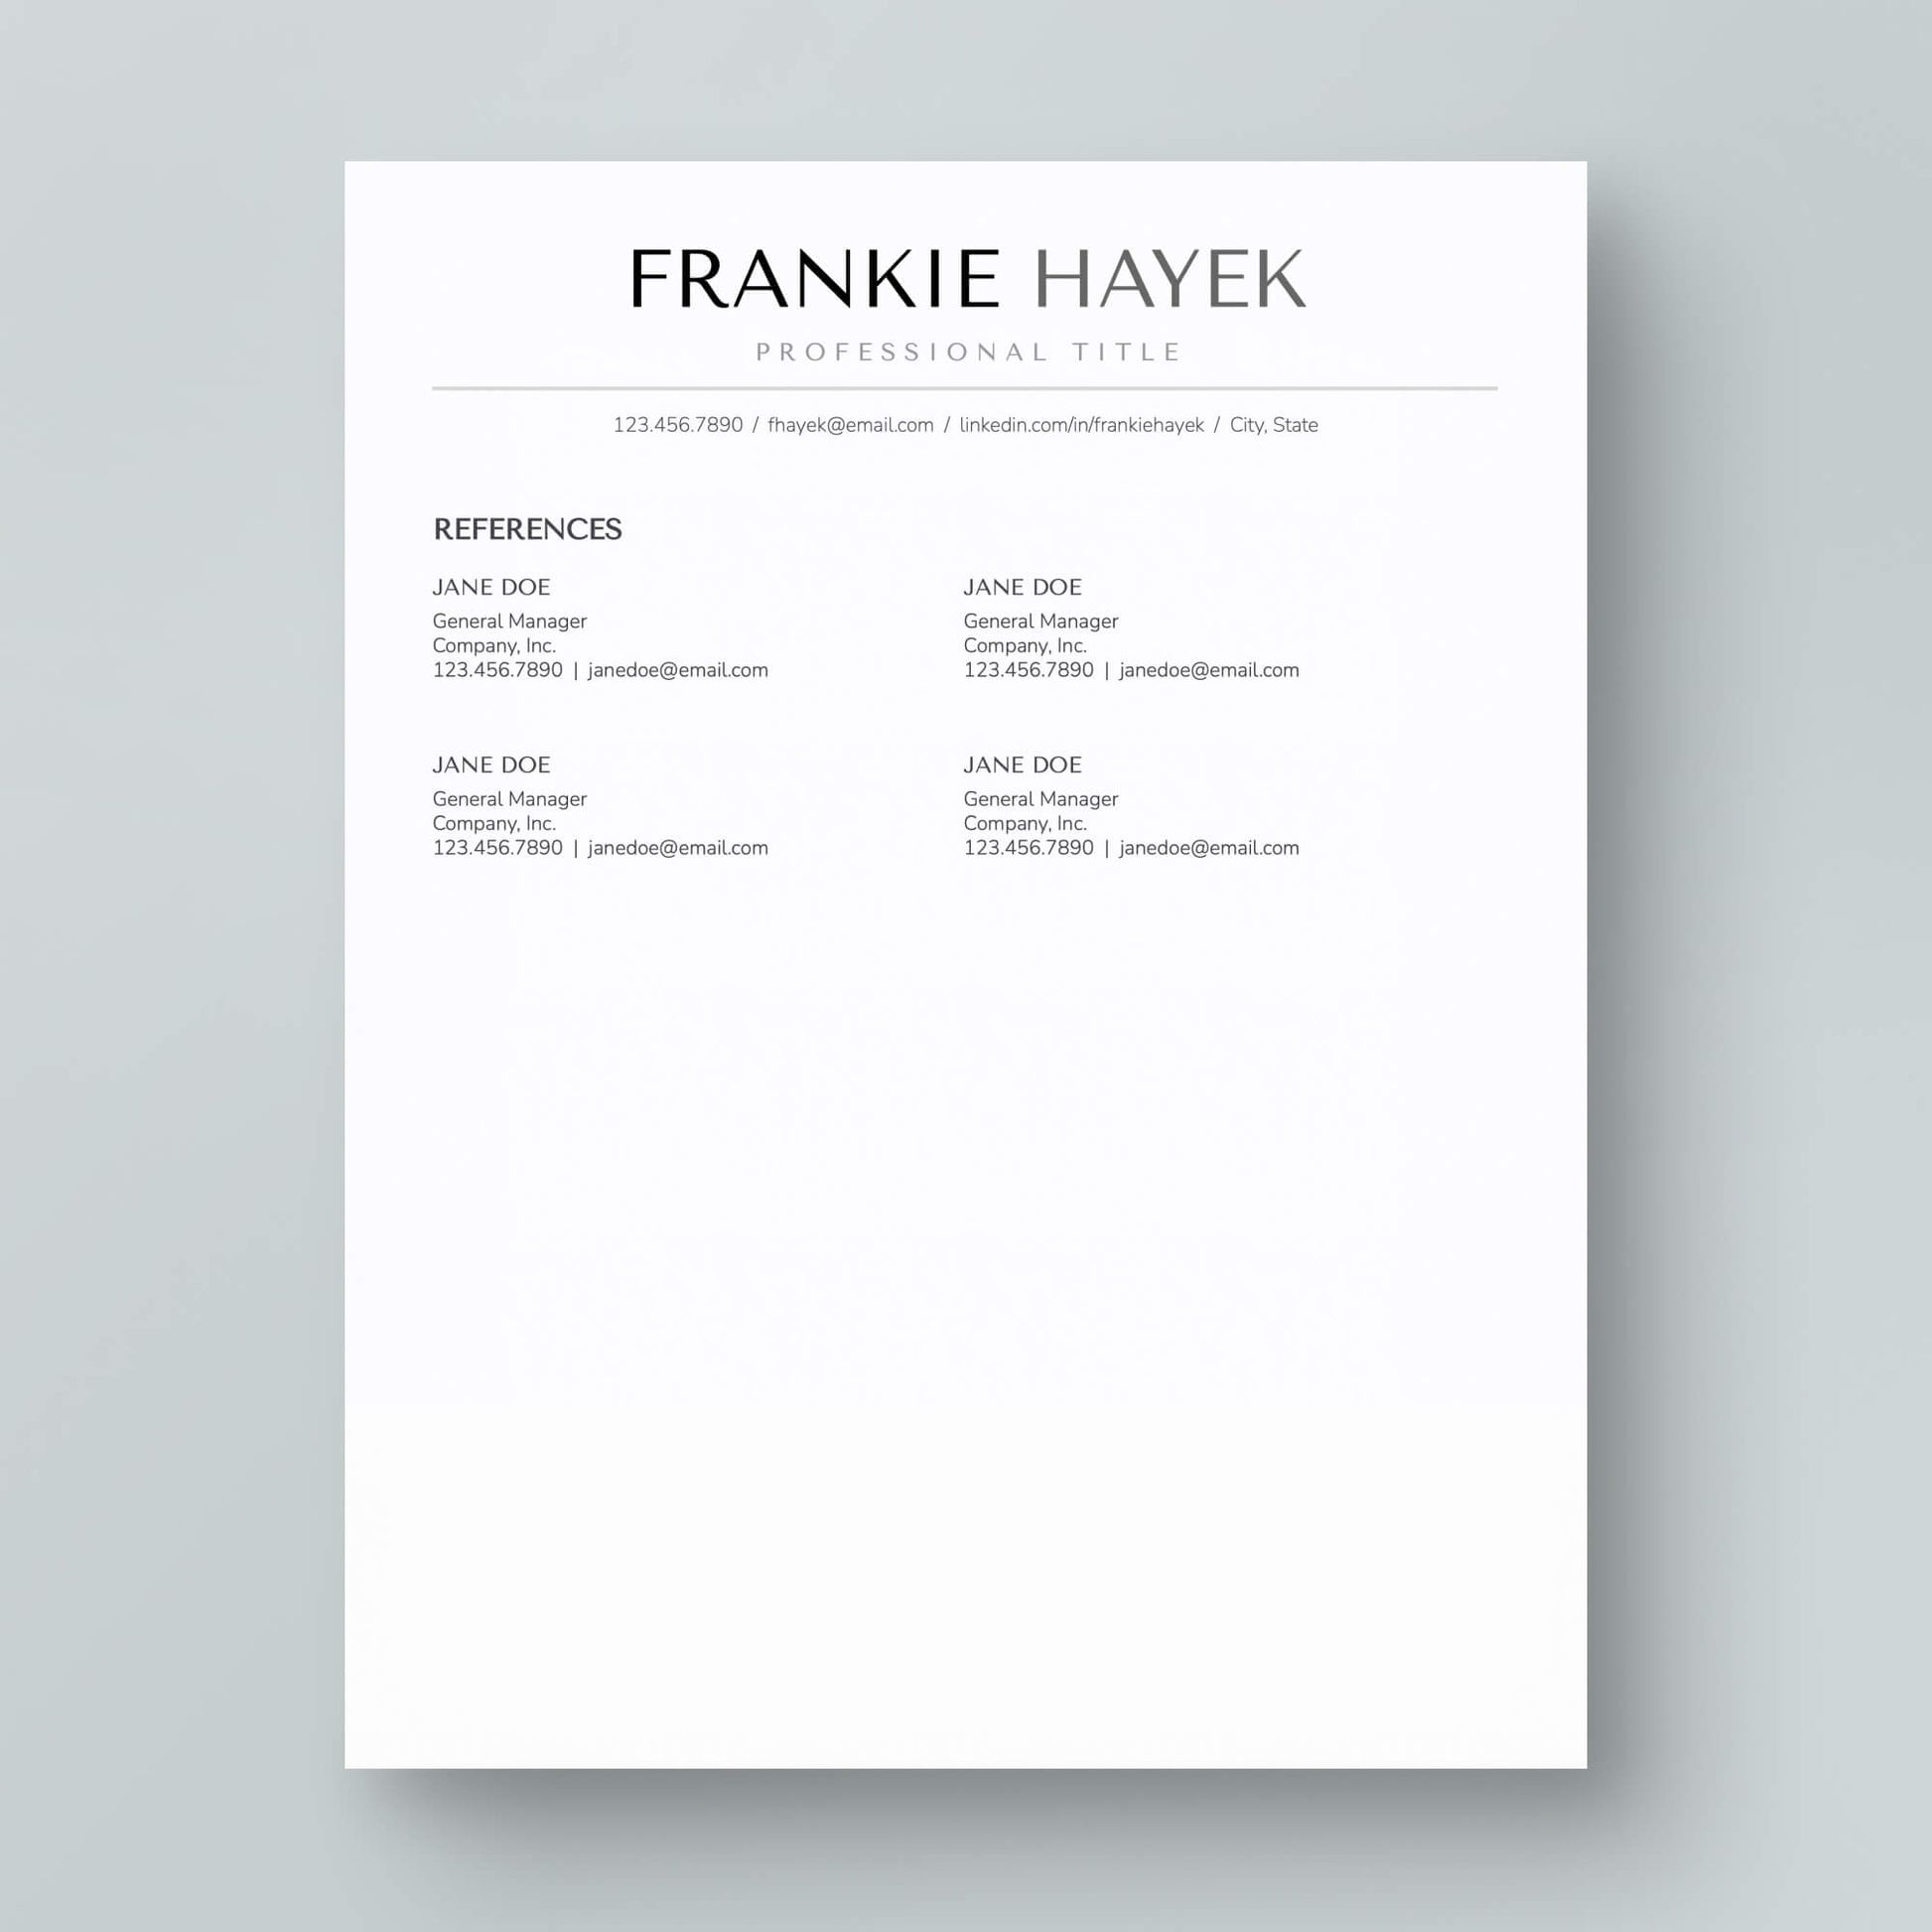 ATS-friendly Resume Template: Frankie Hayek - MioDocs